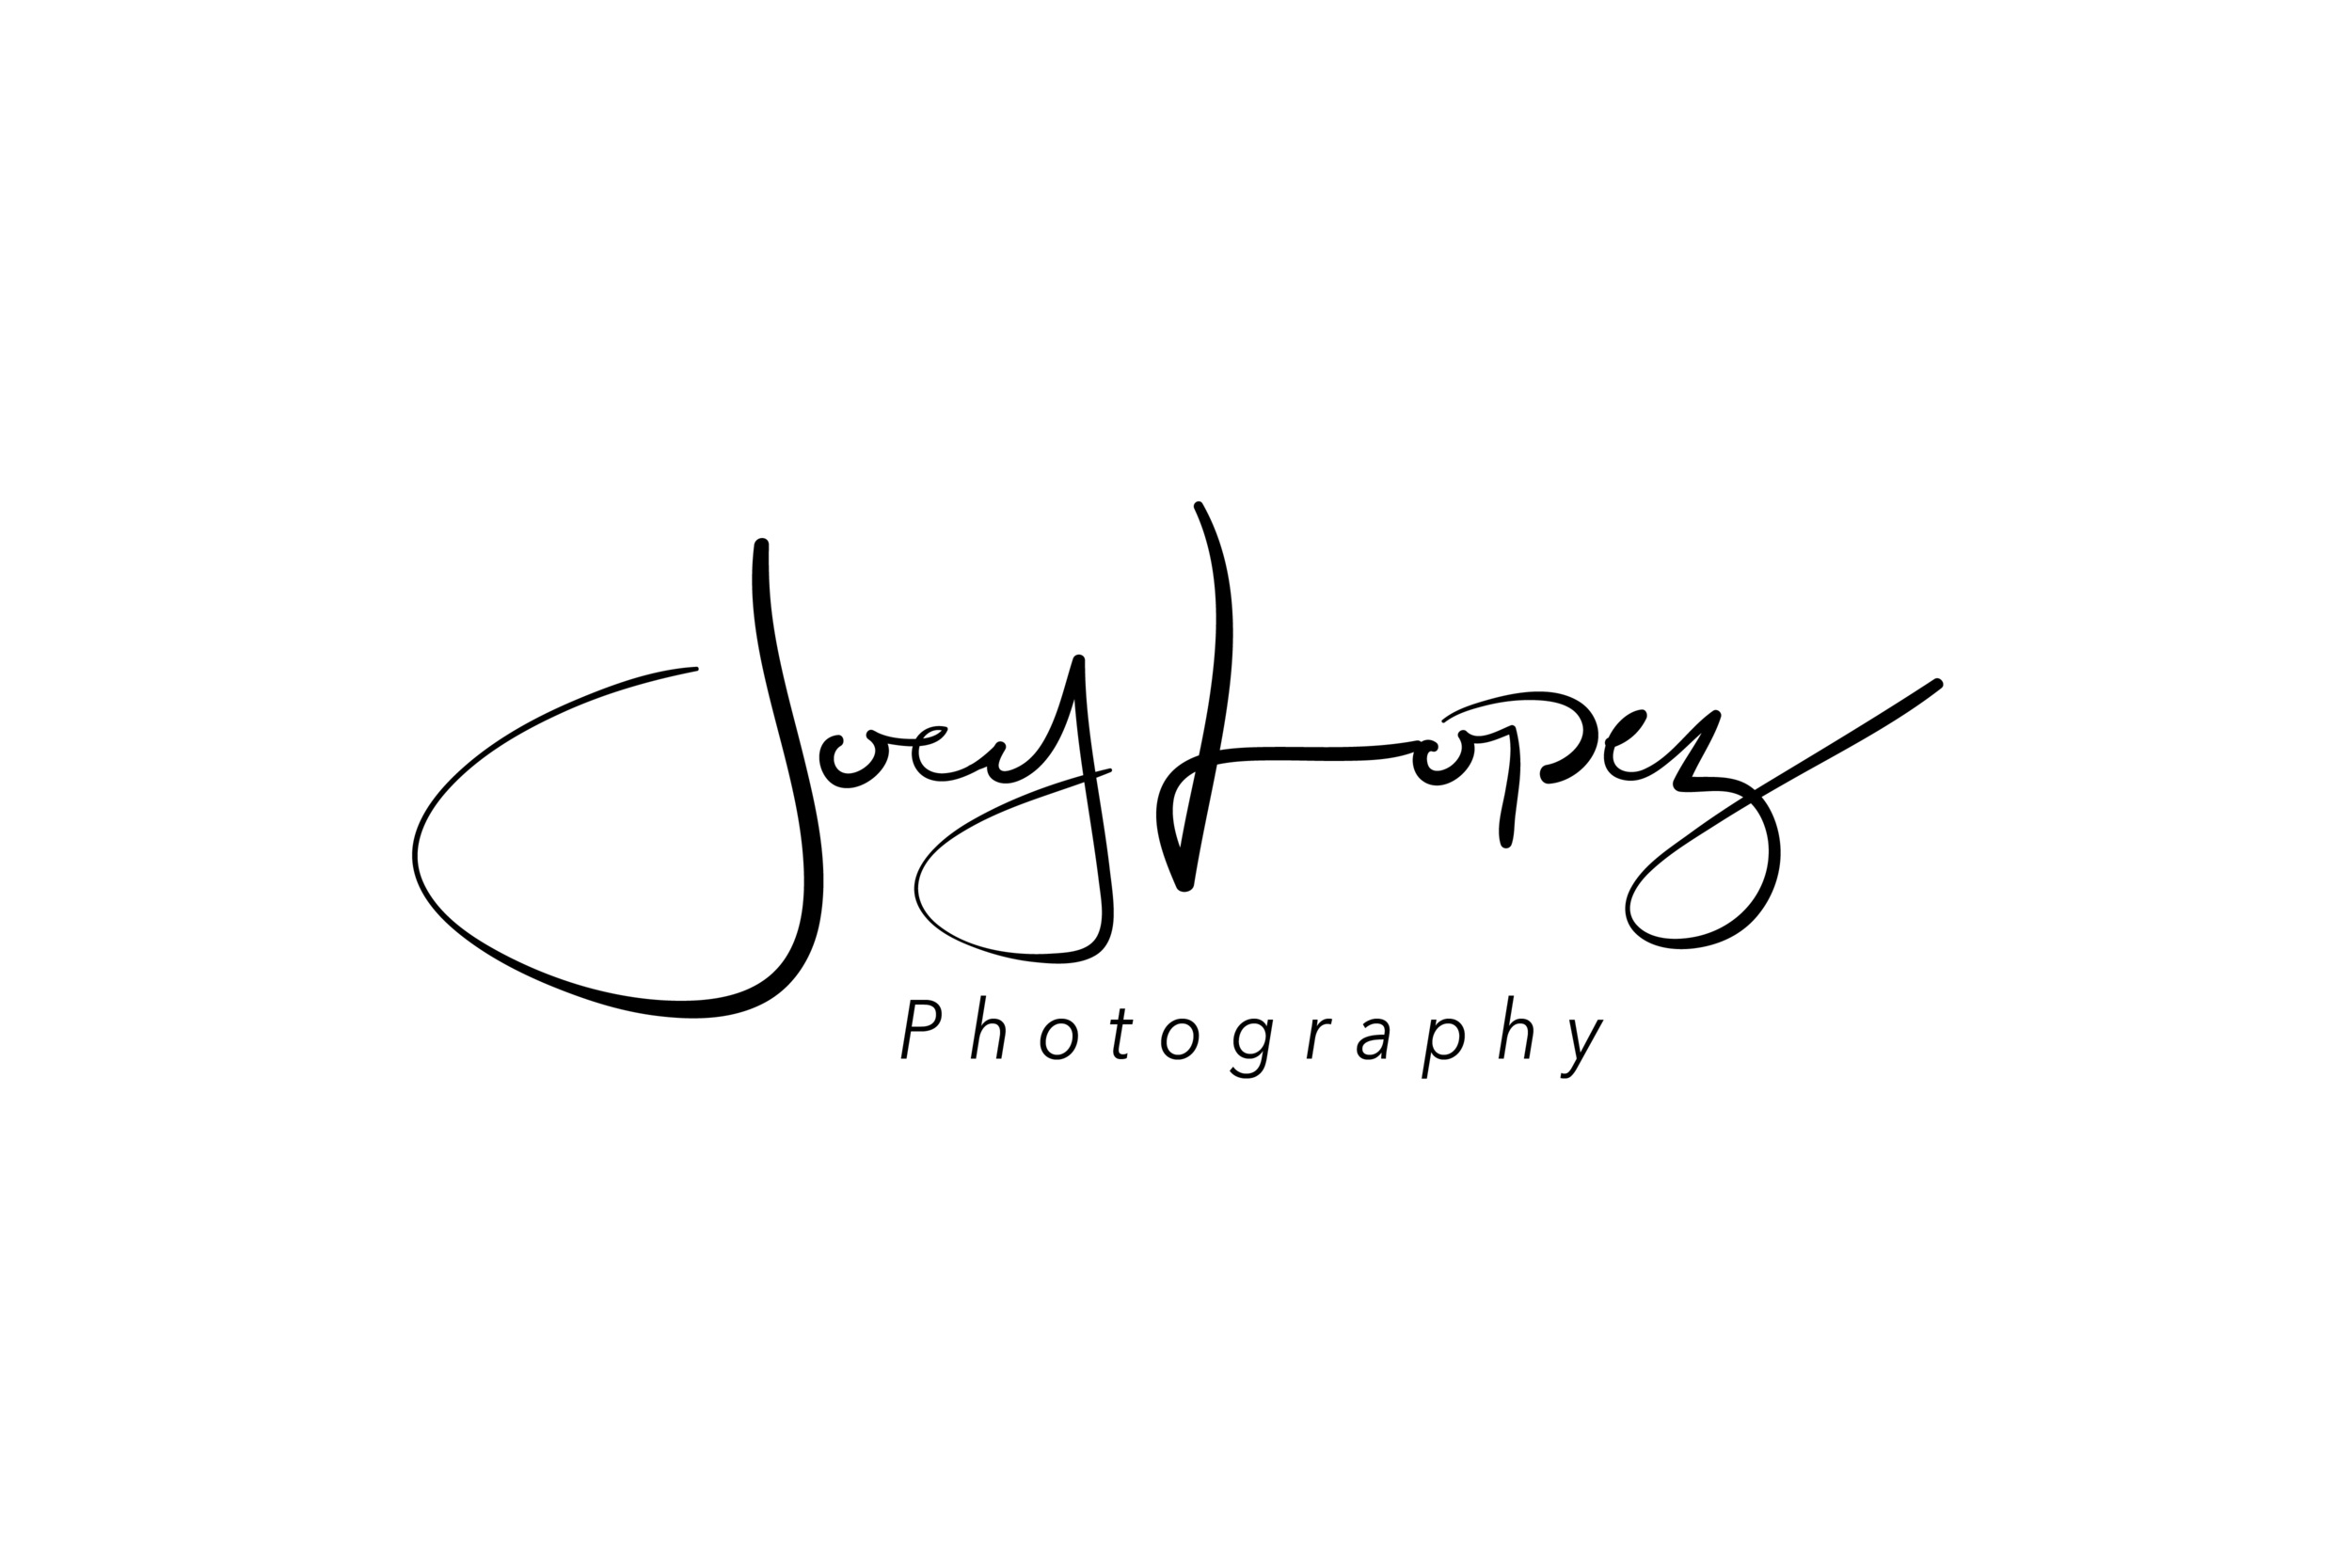 joey lopez photography